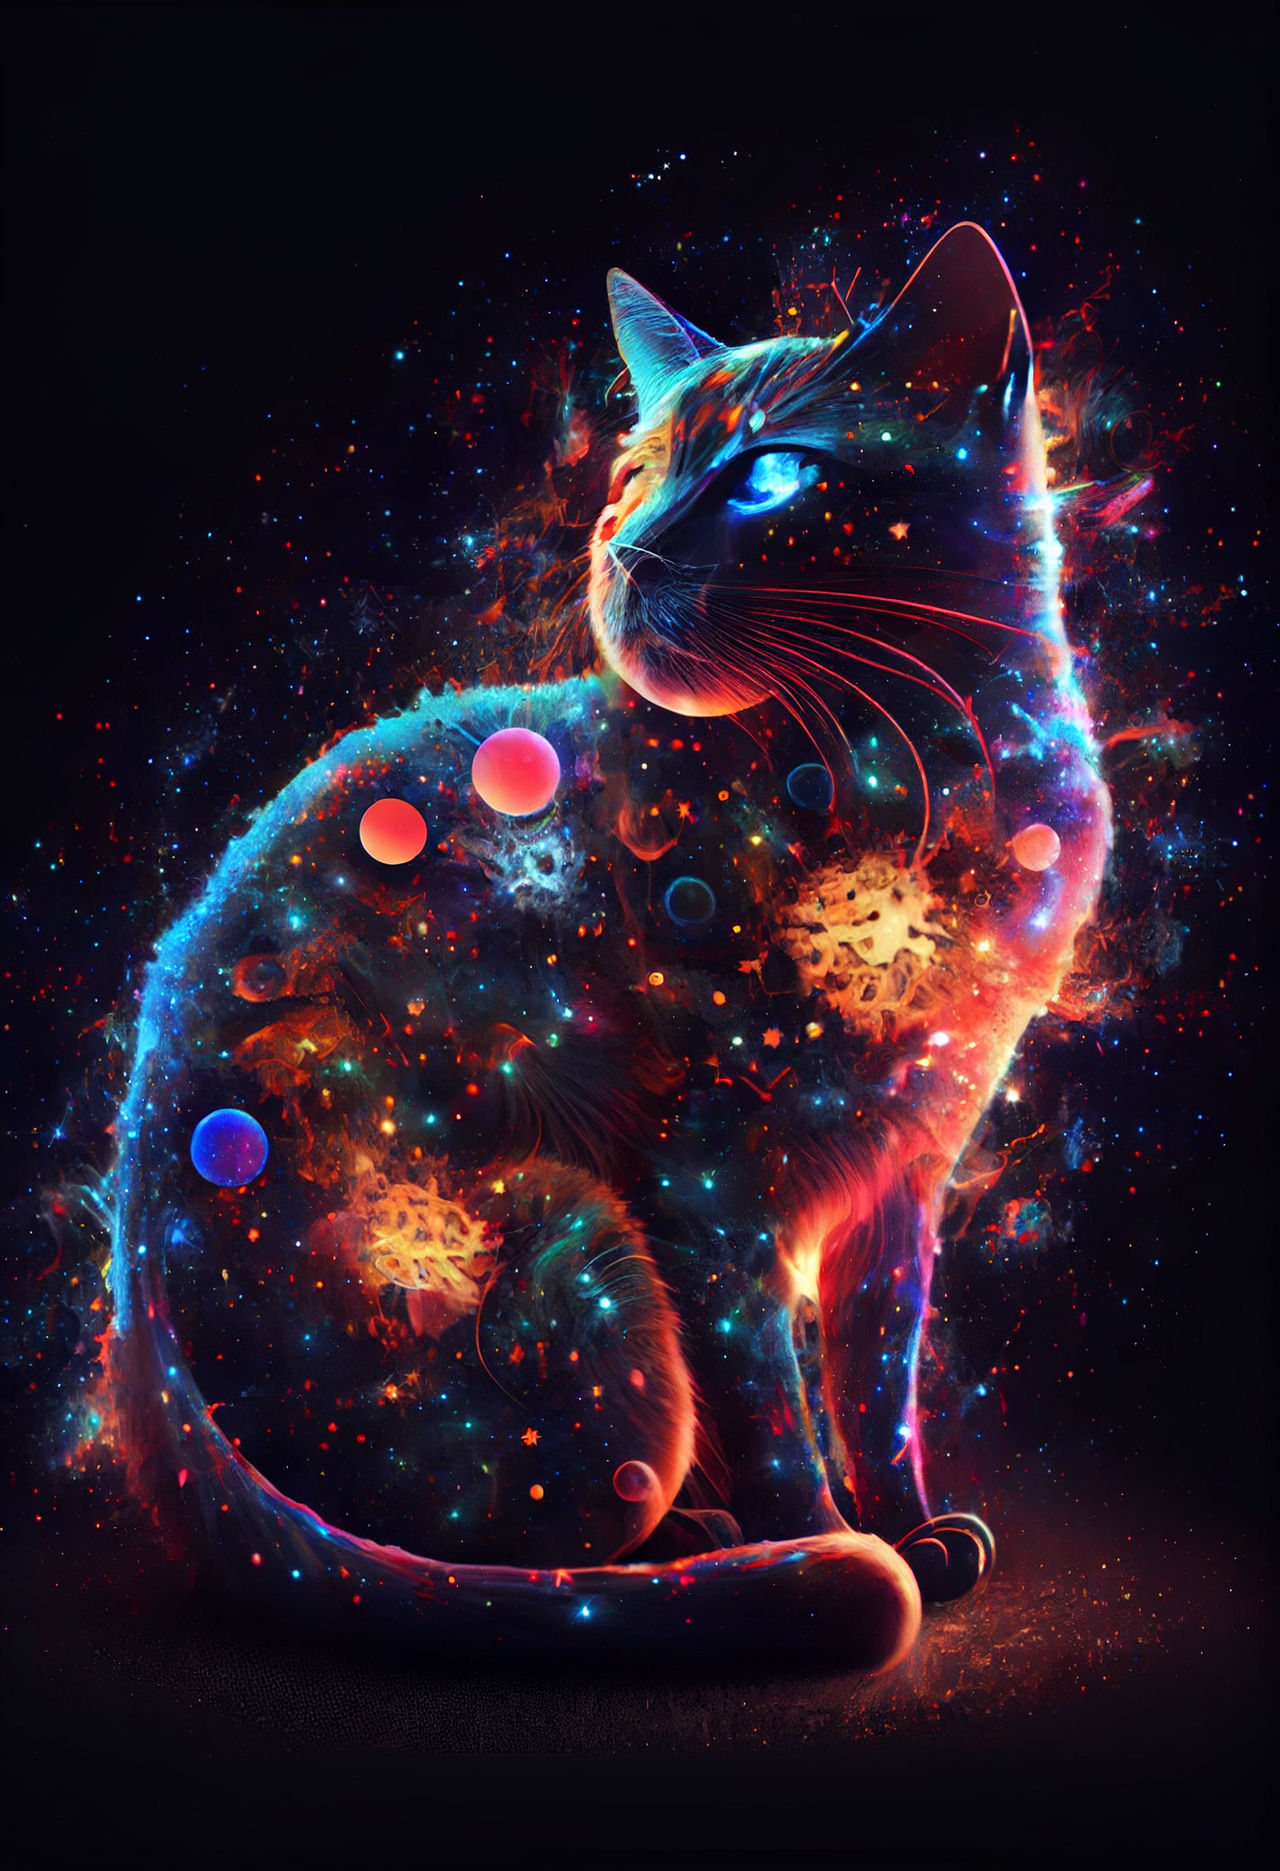 cosmic cat made of stars by elit3workshop on DeviantArt